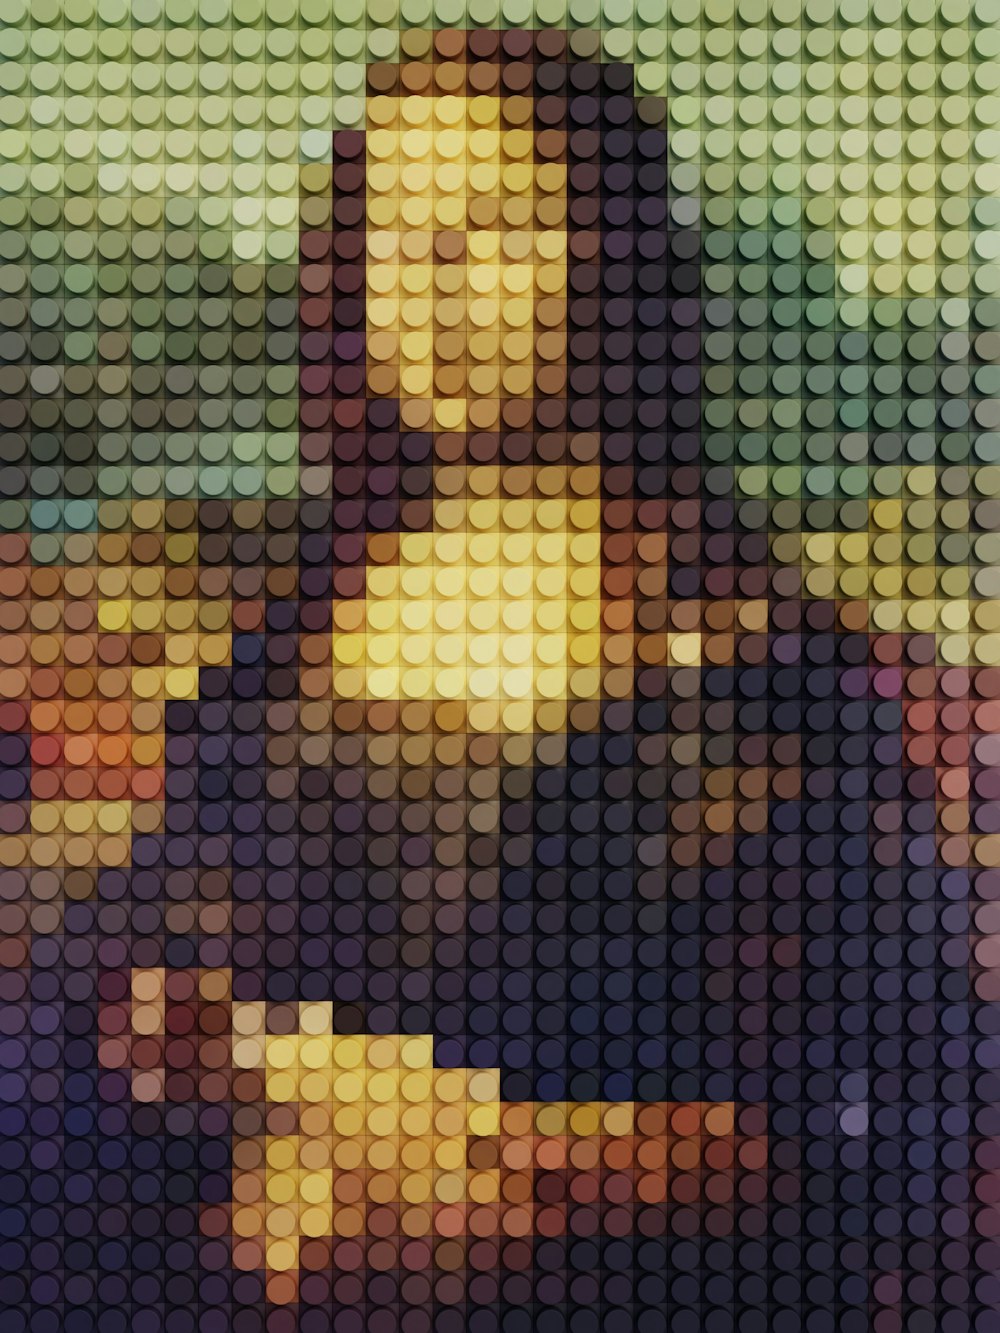 Una foto di una donna fatta di Lego